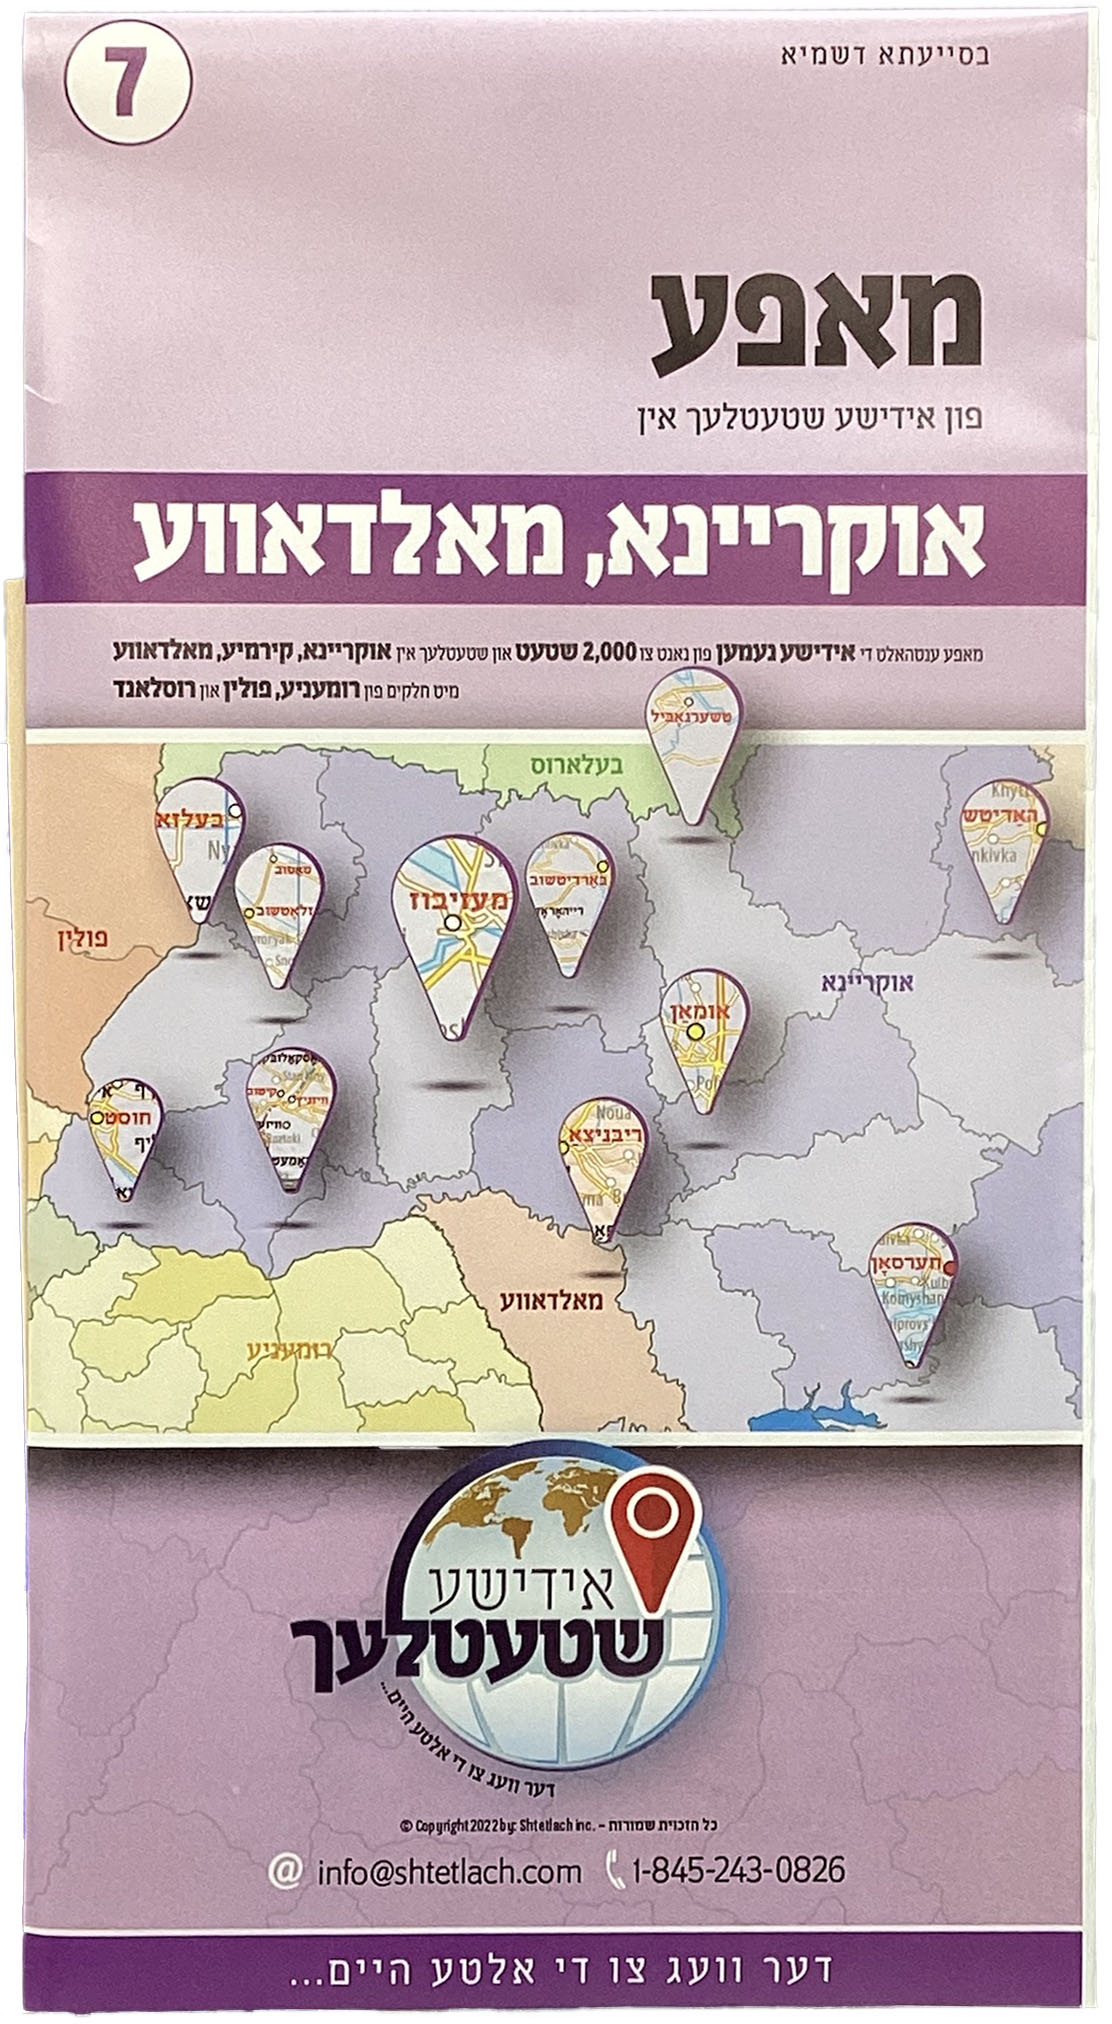 Ukraine Moldova Yiddish Map 7 מאפע פון אידישע שטעטלעך אין אוקריינא מאלדאווע